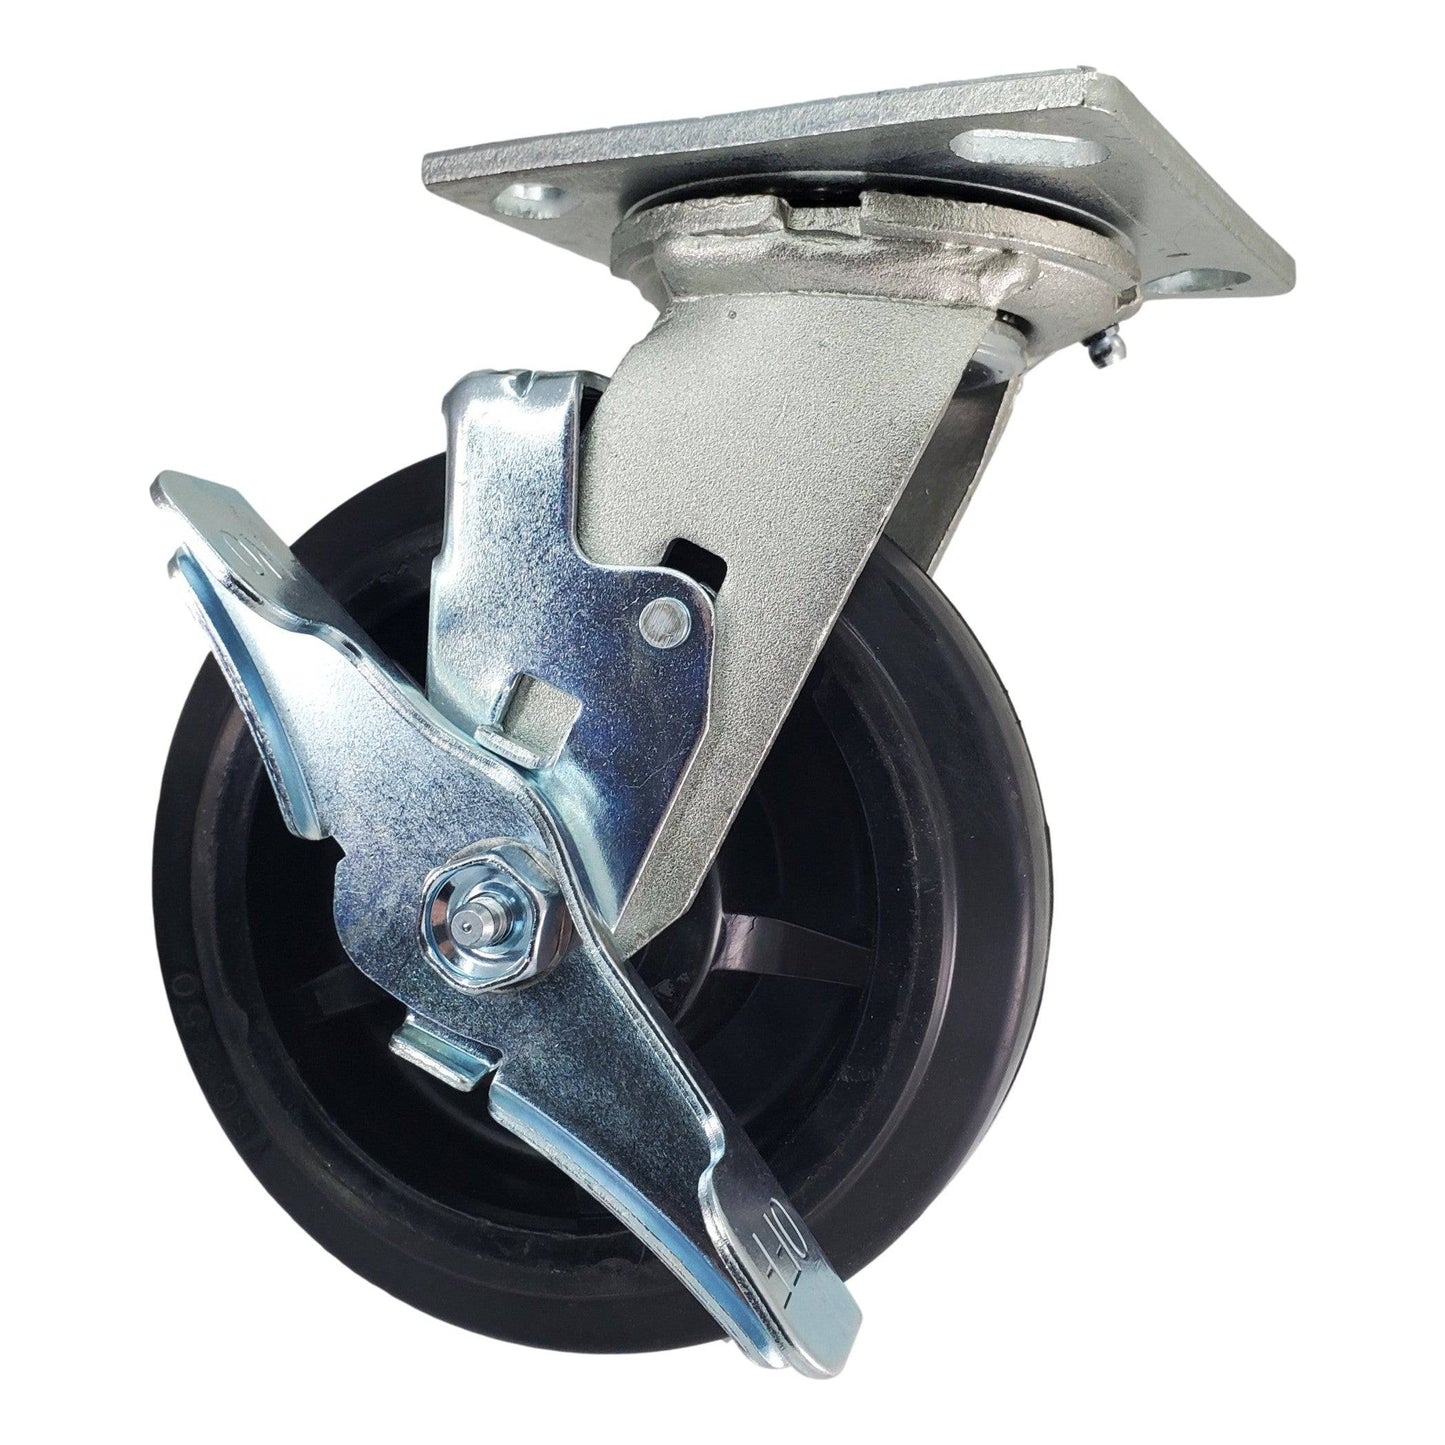 6" x 2" Rubber On Nylon Wheel Swivel Caster w/ Top Lock Brake - 500 lbs. Capacity - Durable Superior Casters